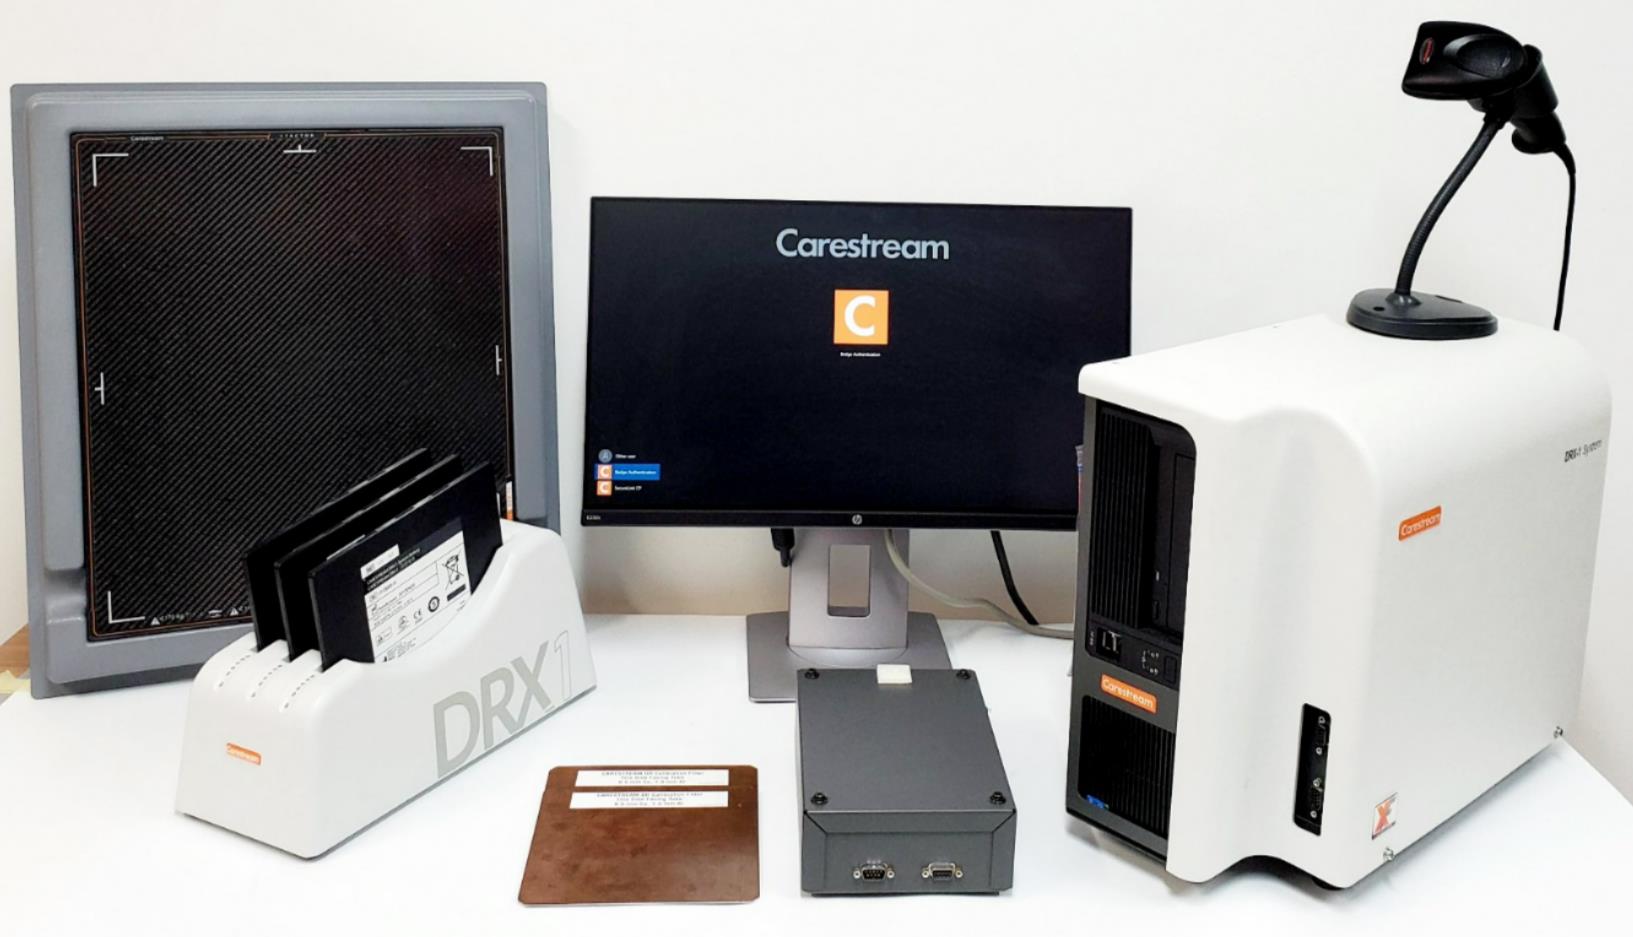 Carestream DRX-1C with Workstation